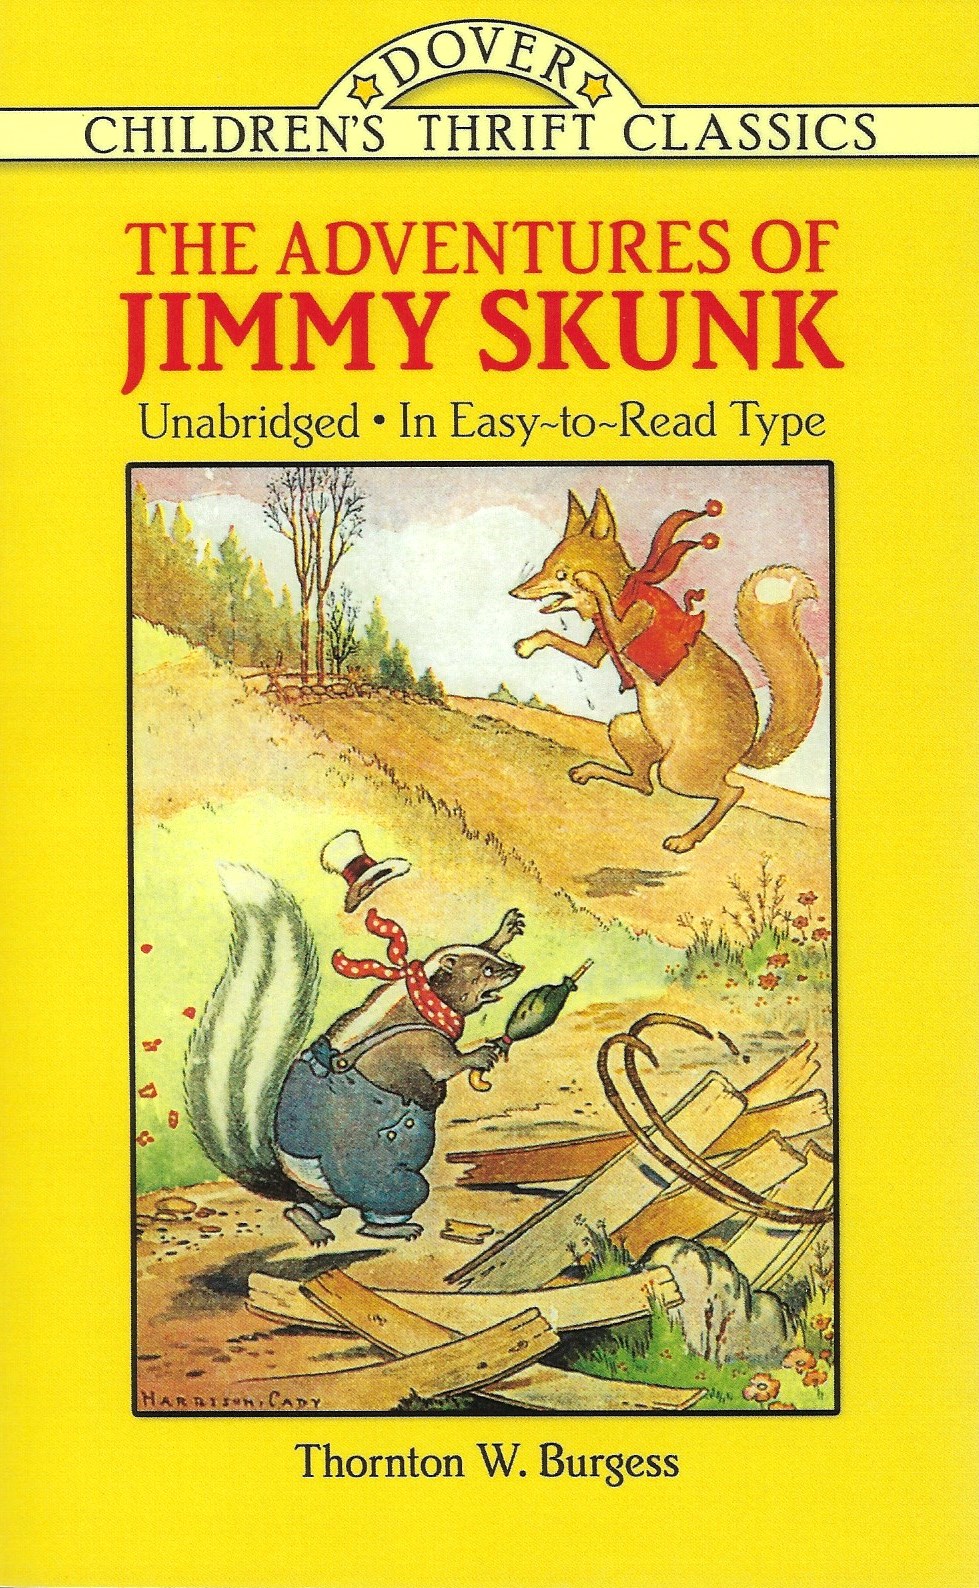 THE ADVENTURES OF JIMMY SKUNK Thornton W. Burgess